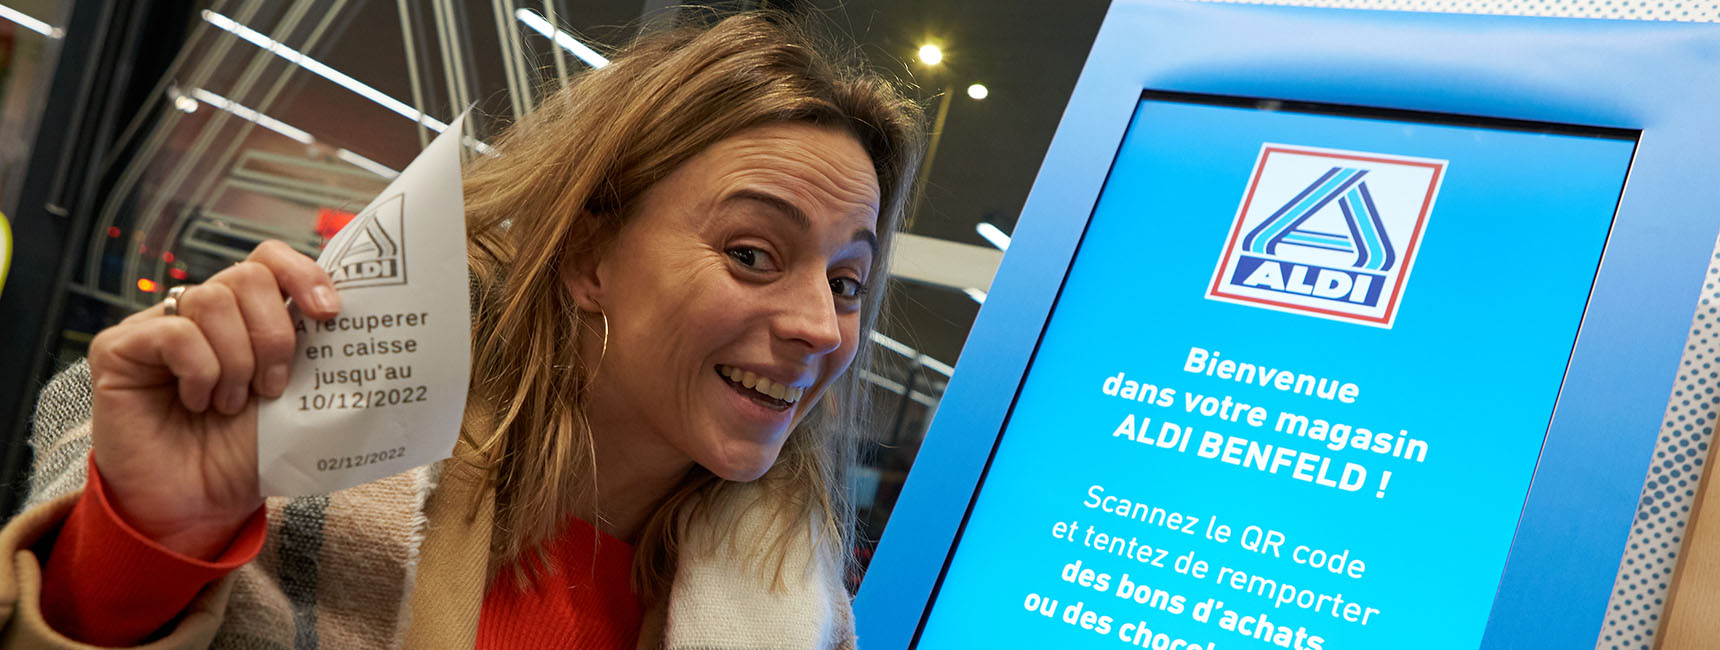 Header - ALDI-Benfeld Keemia Lyon Agence Rhône-Alpes